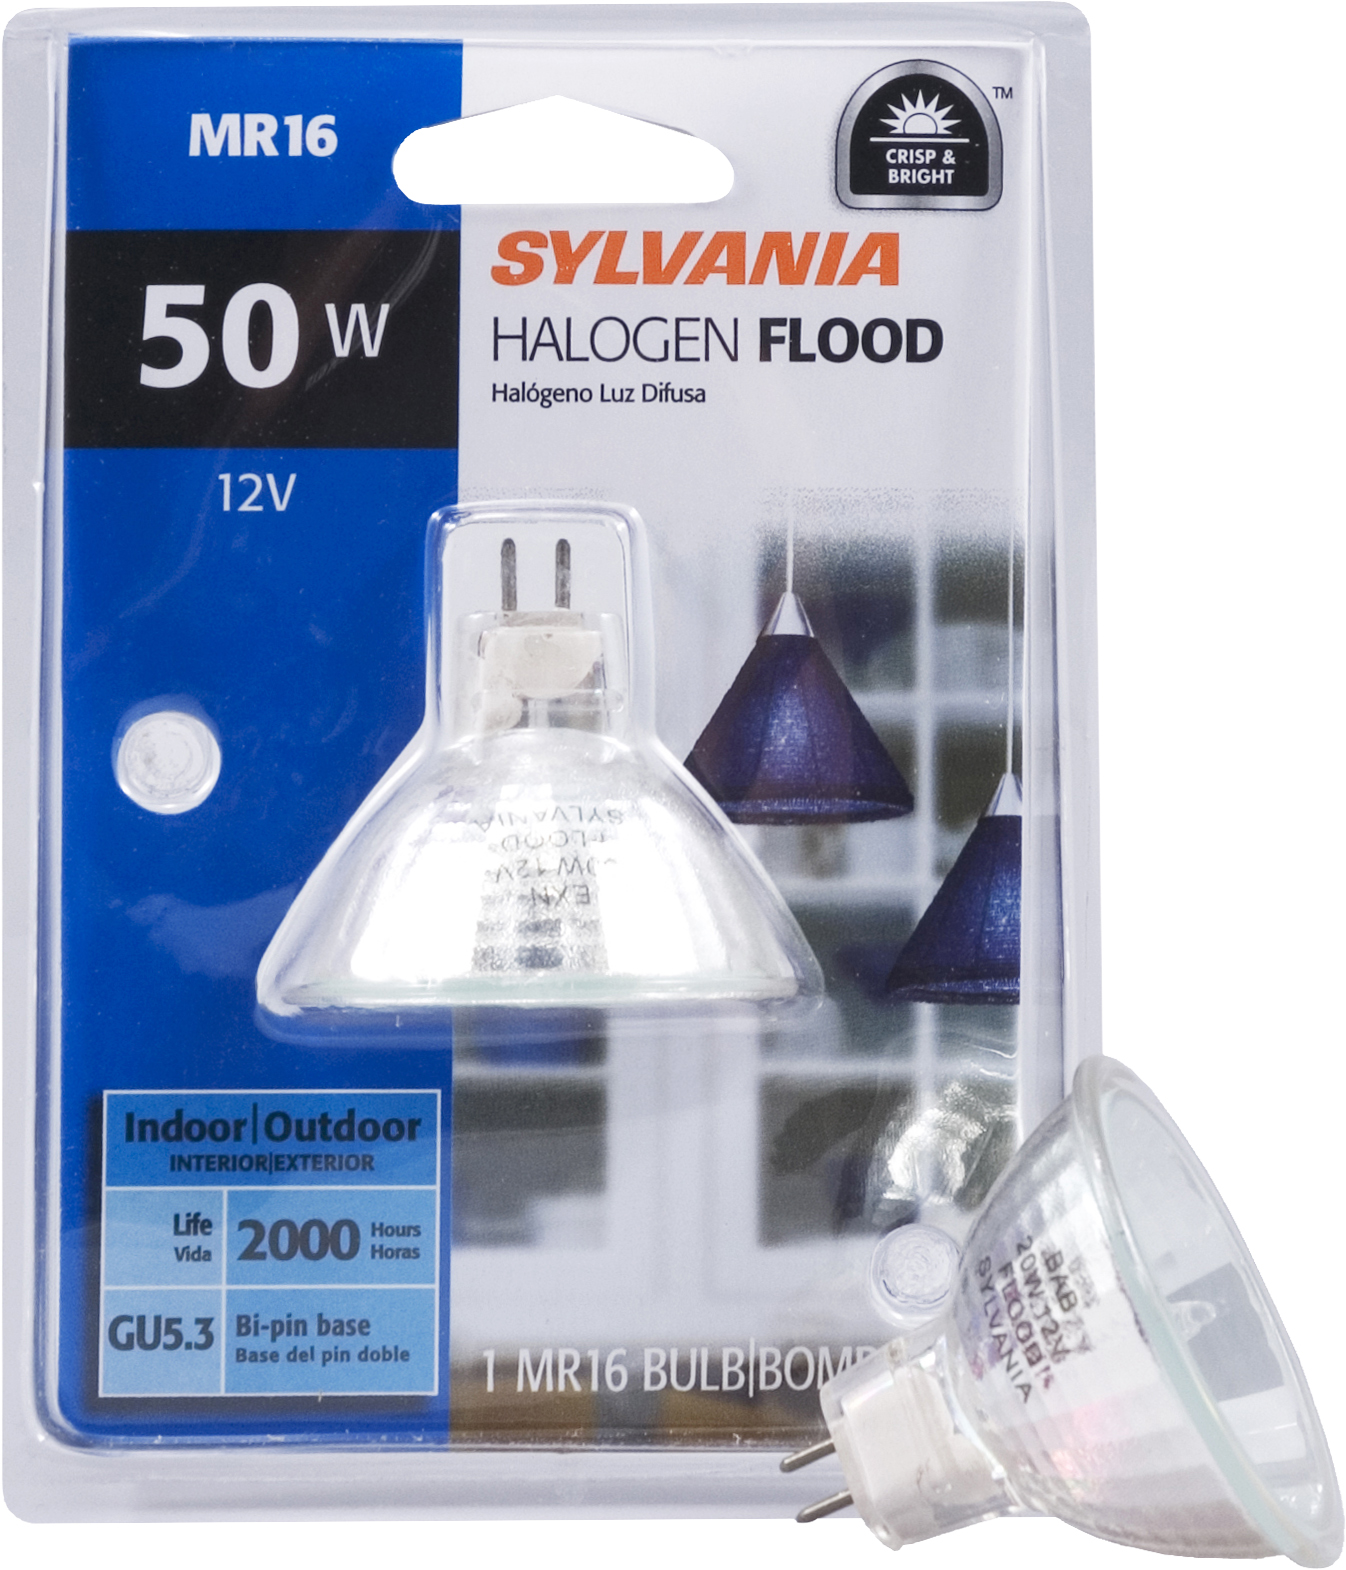 Sylvania Halogen Reflector Flood Lamp MR16-Bipin Base 120V Light Bulb 50W - Single Bulb